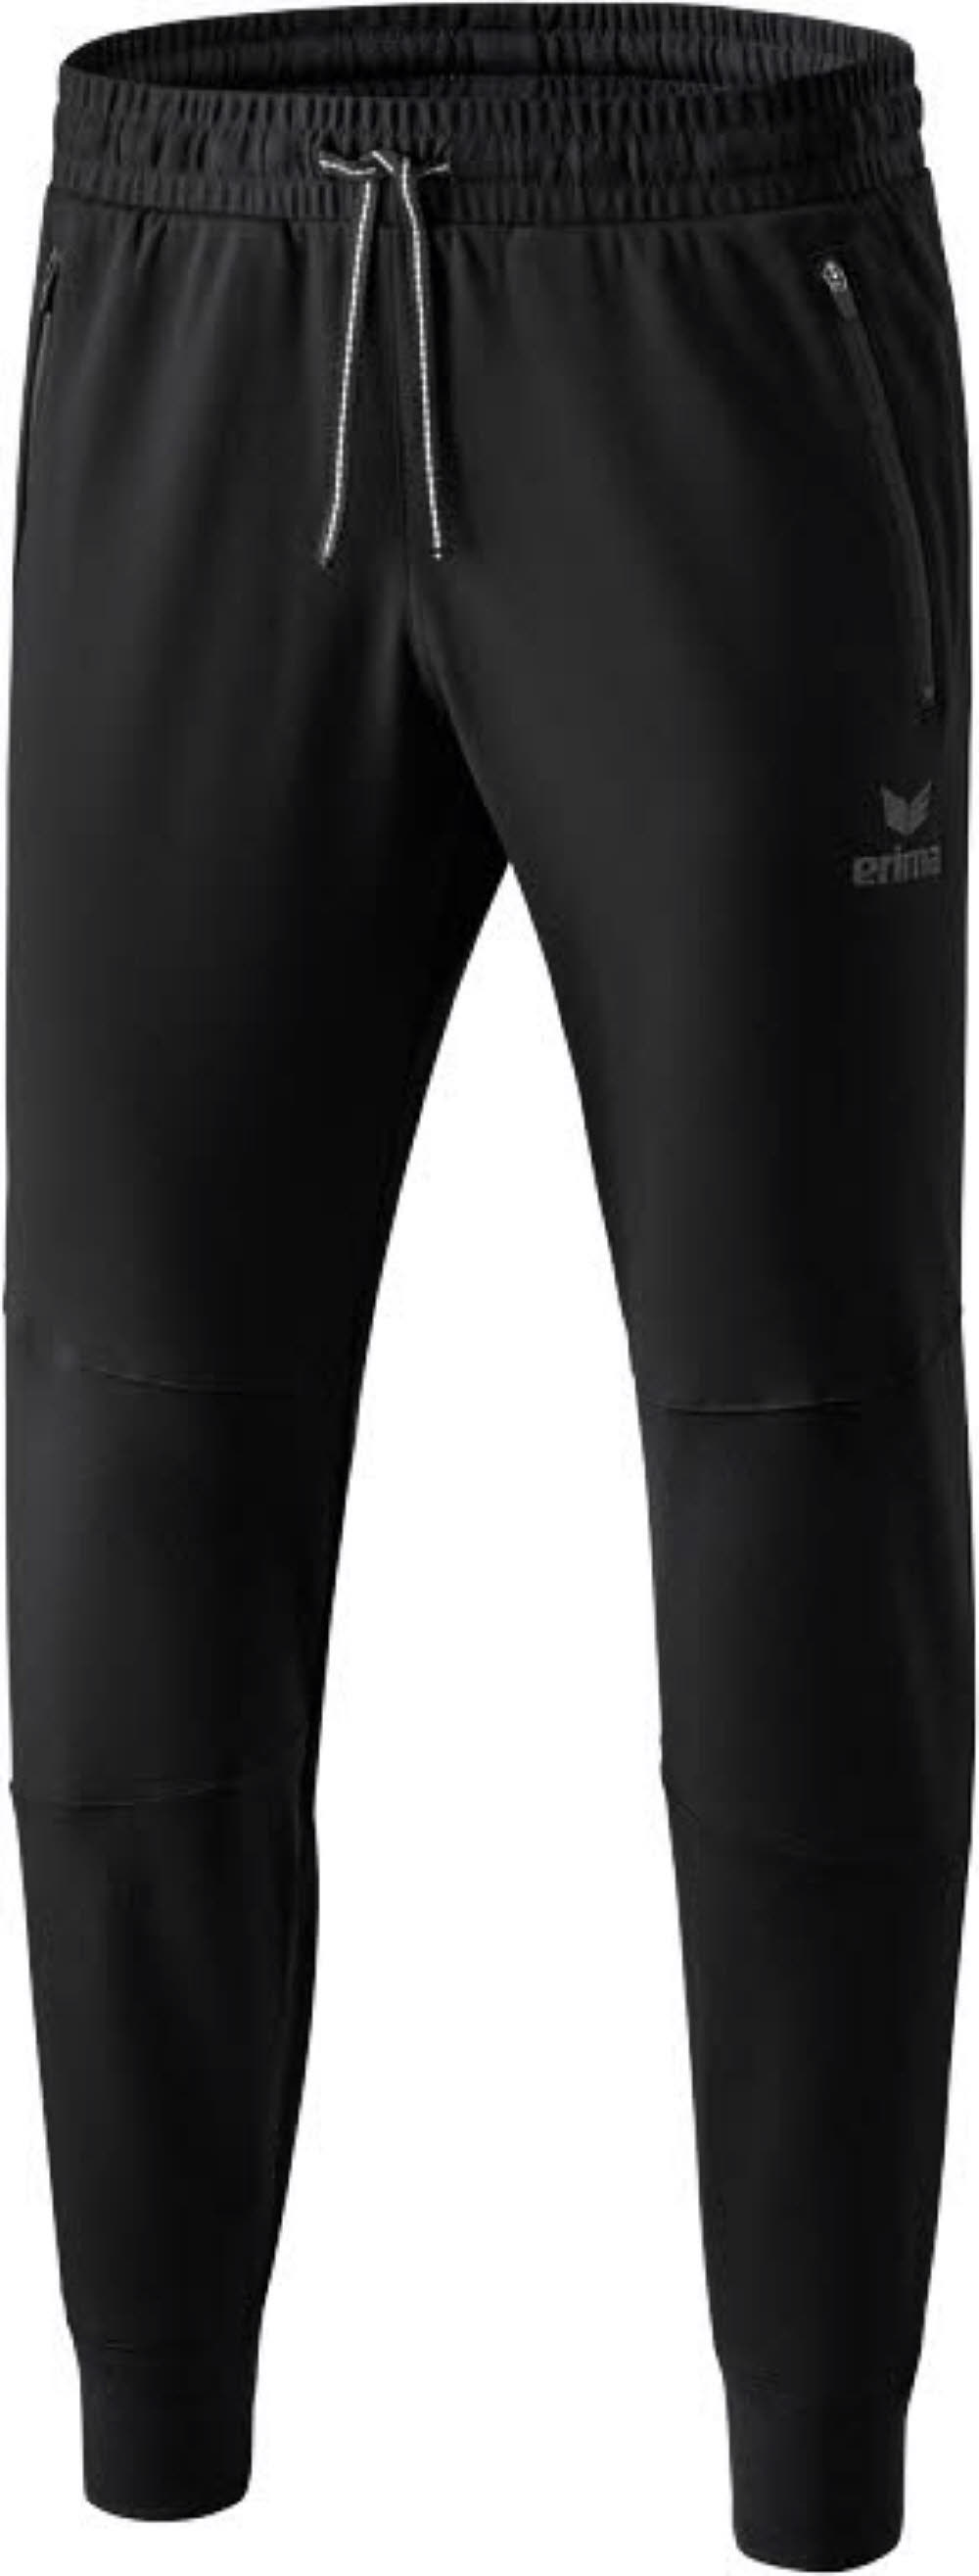 erima Essential Sweatpants Herren Jogginghose Sporthose Trainingshose schwarz NEU